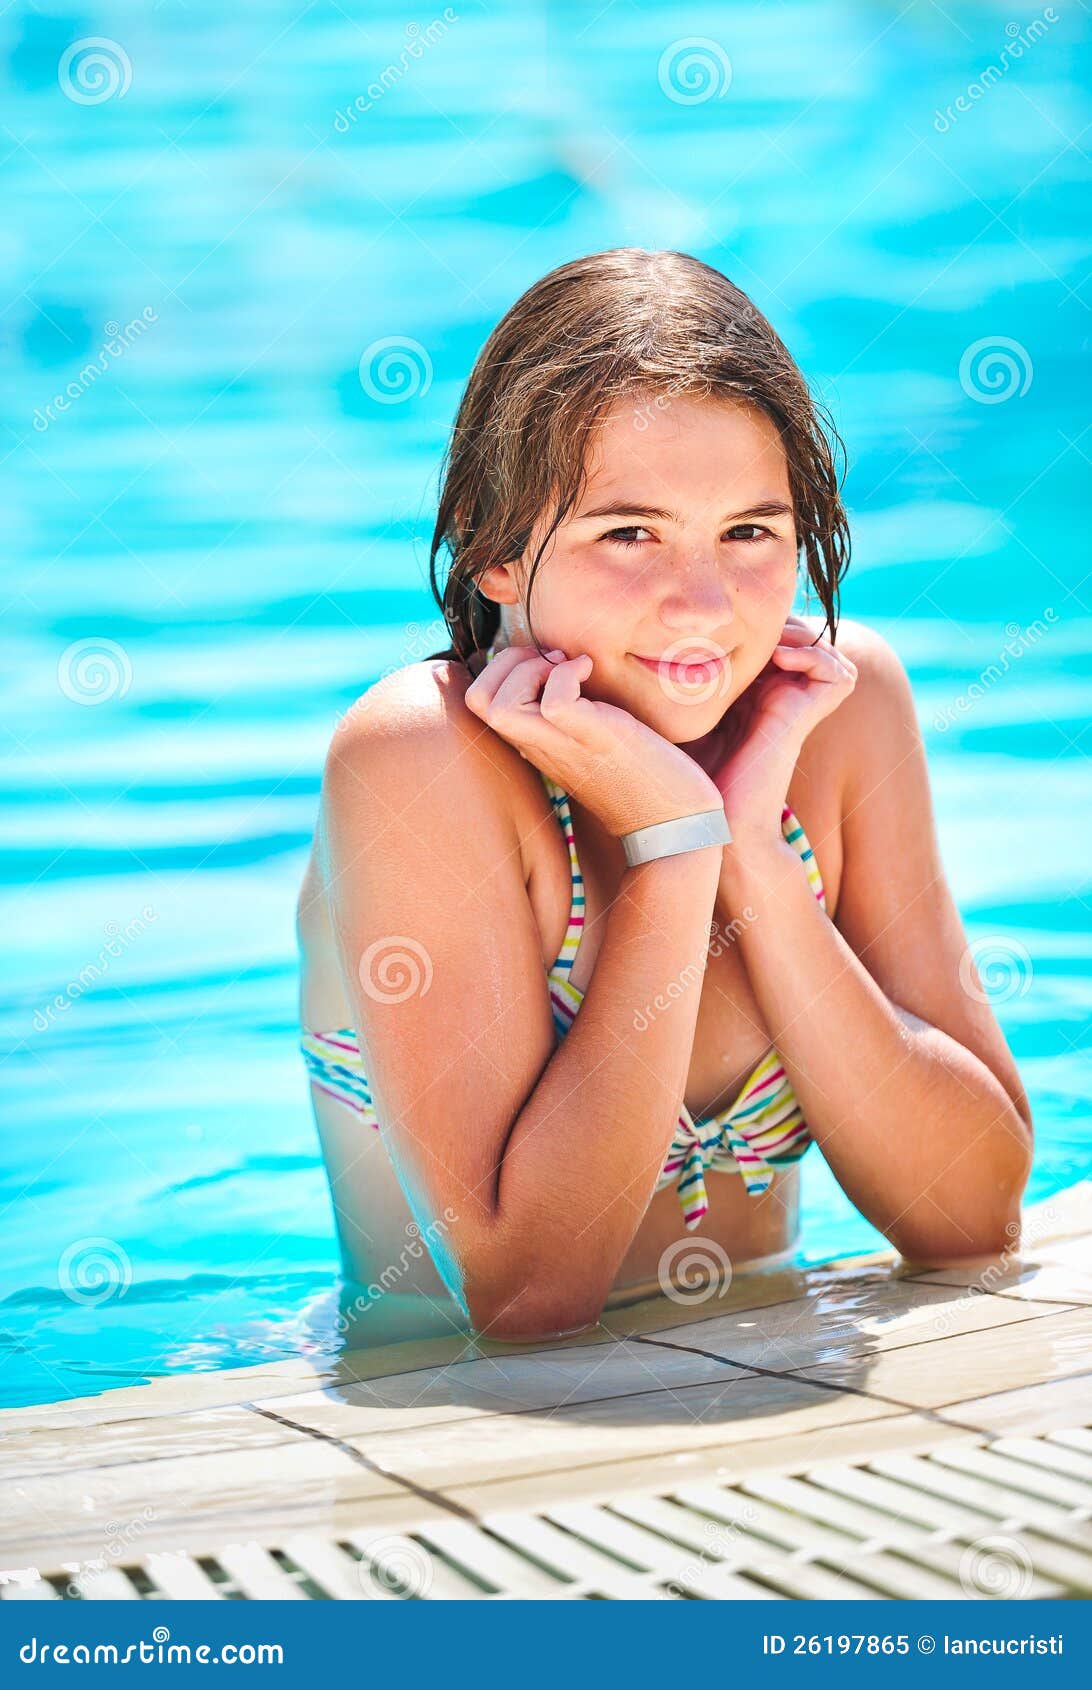 1,001 Teen Girl Swimmer Stock Photos - Free & Royalty-Free Stock